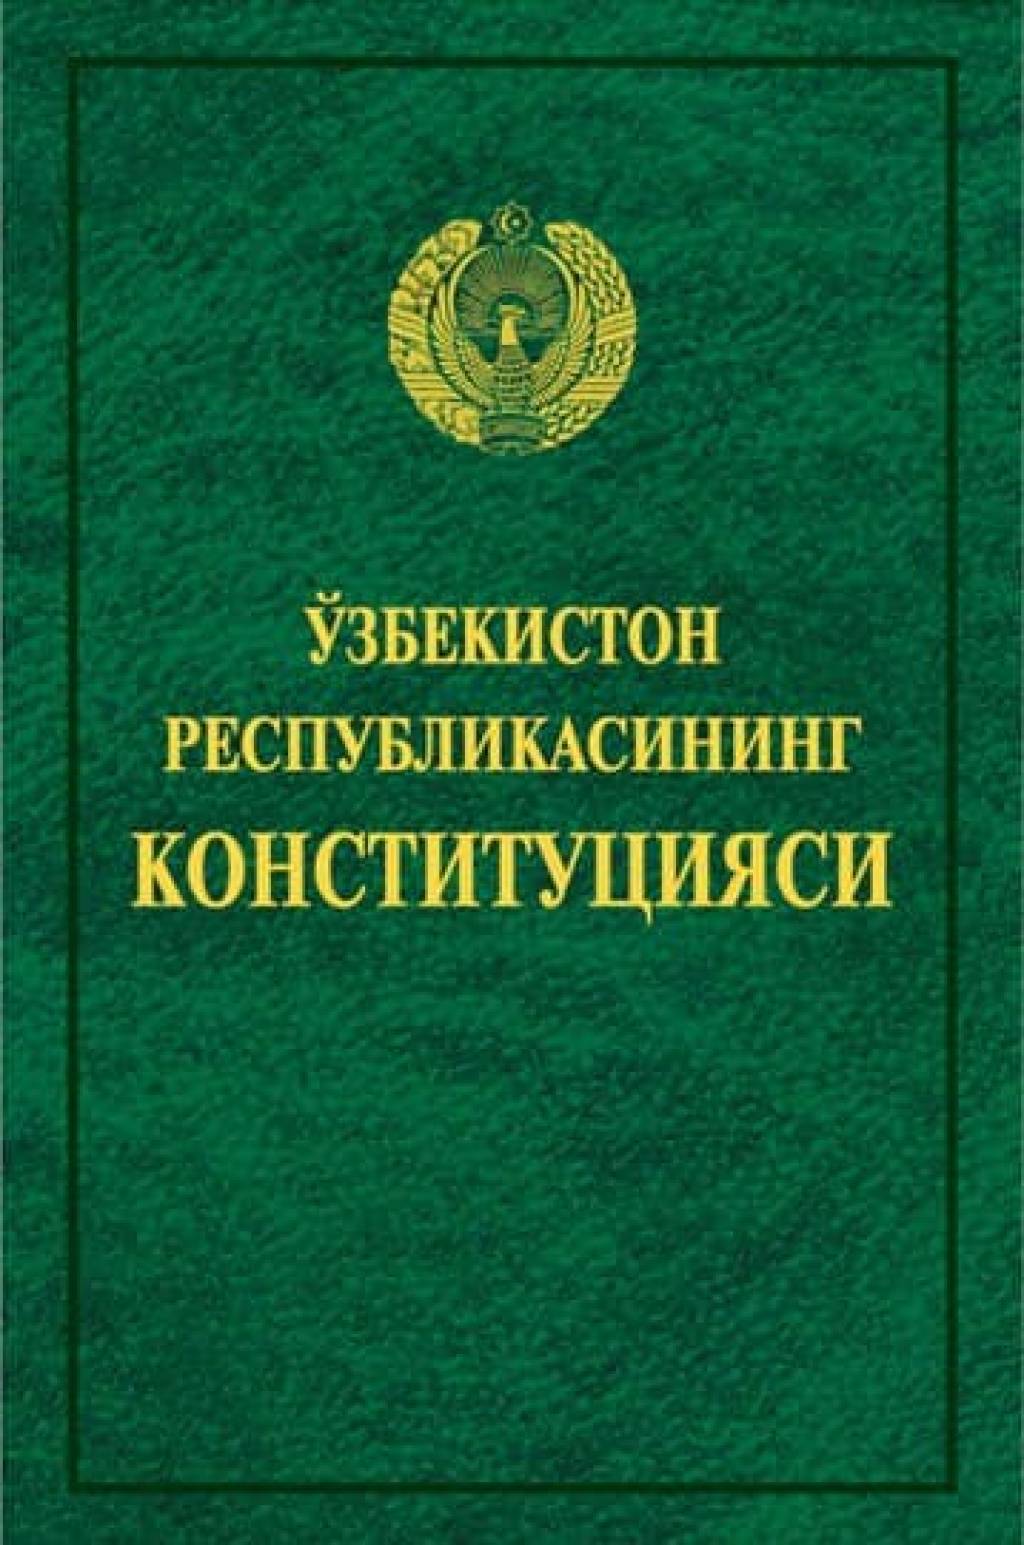 Конституционная книга Узбекистана